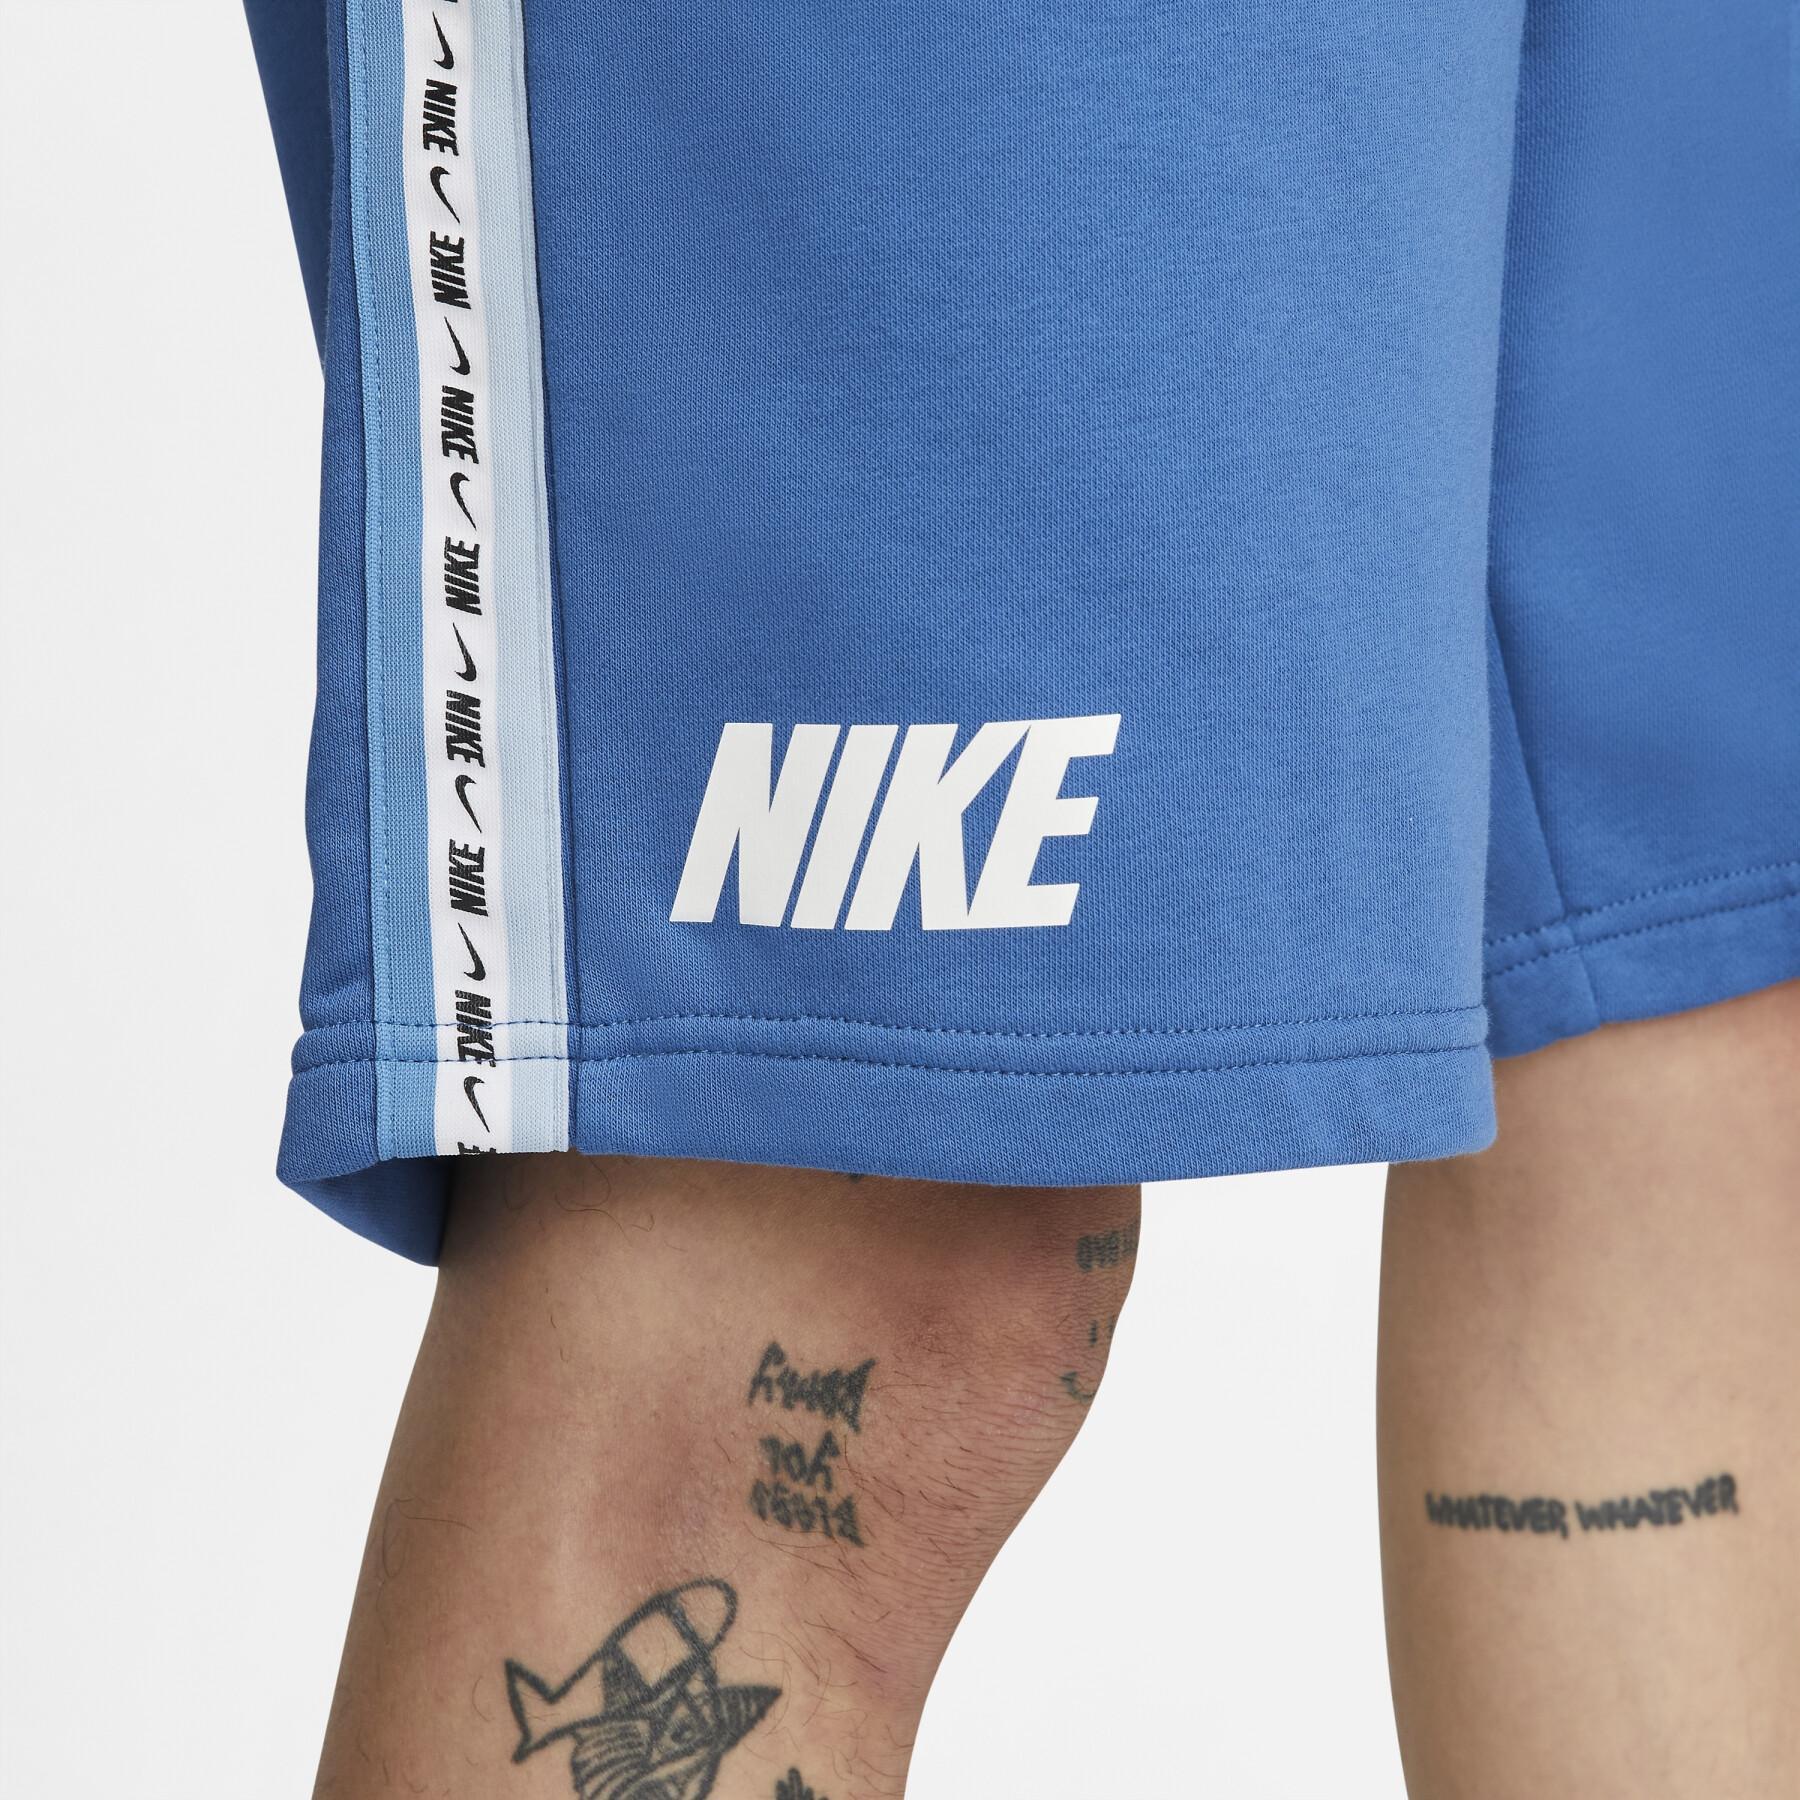 Pantalón corto Nike Repeat